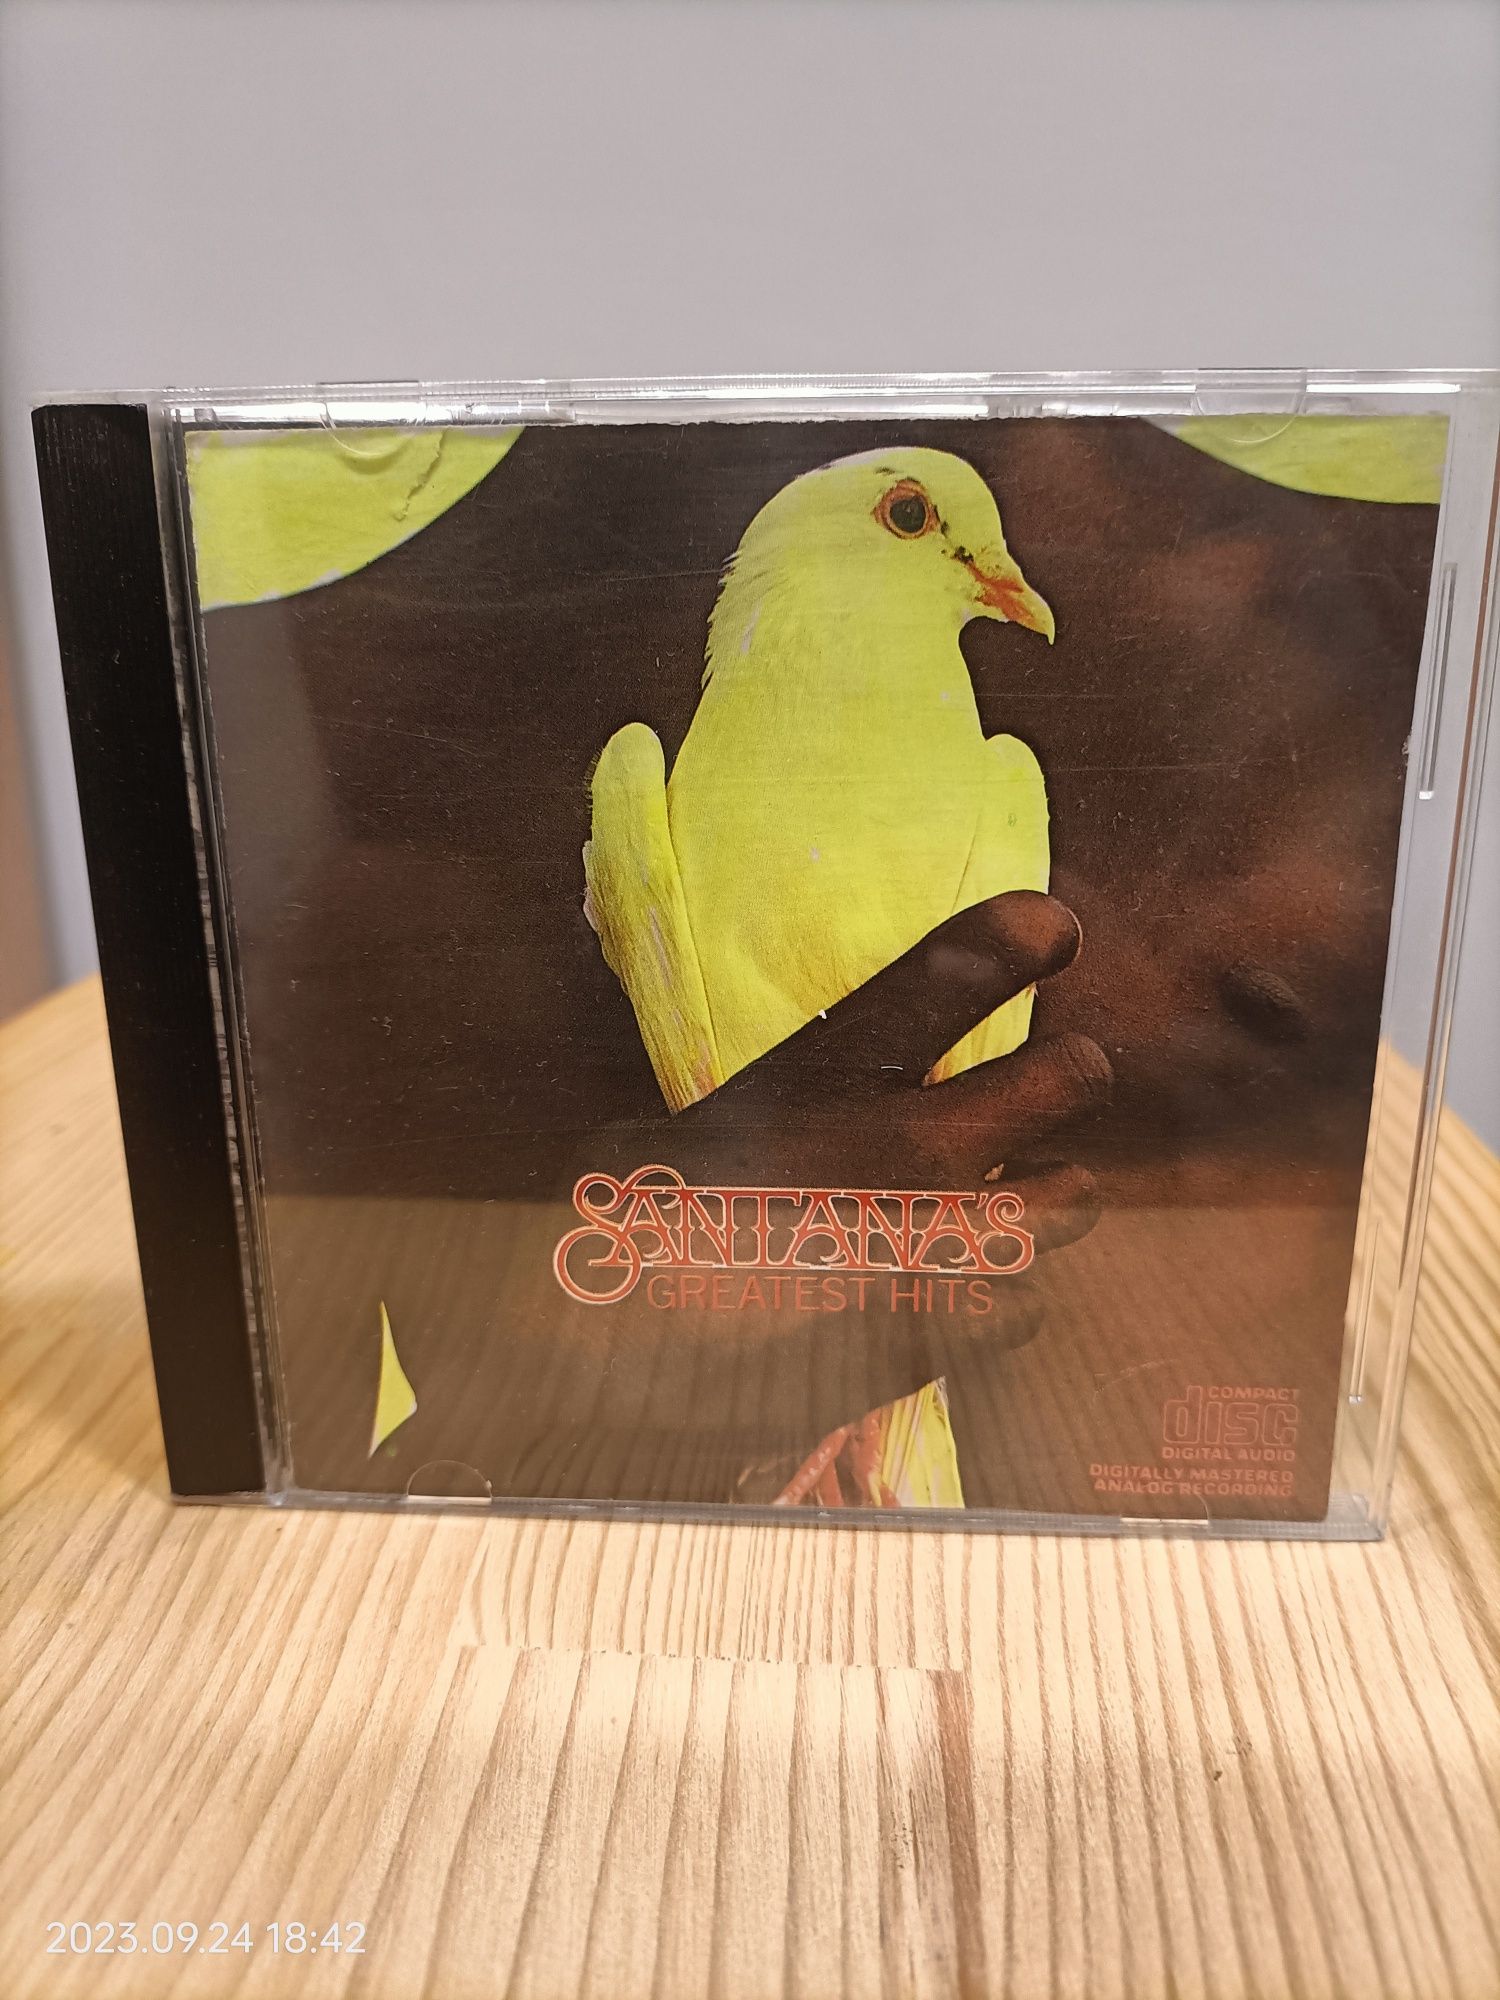 Santana - Greatest hits cd